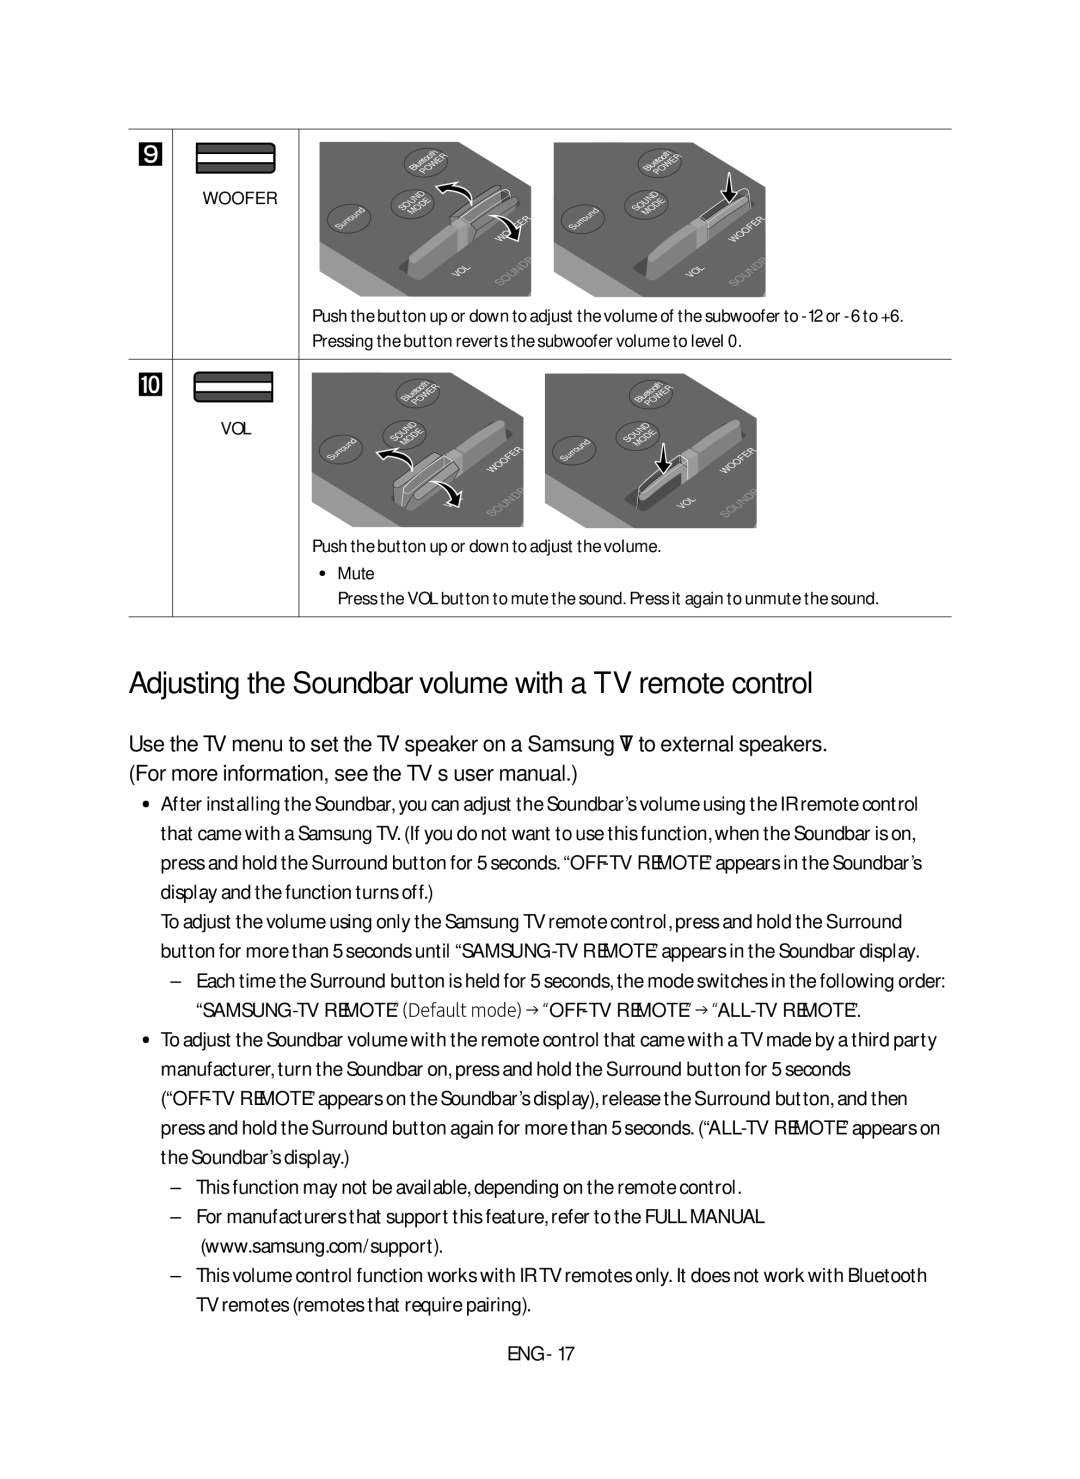 Samsung HW-M4500/EN manual Adjusting the Soundbar volume with a TV remote control, Mute 